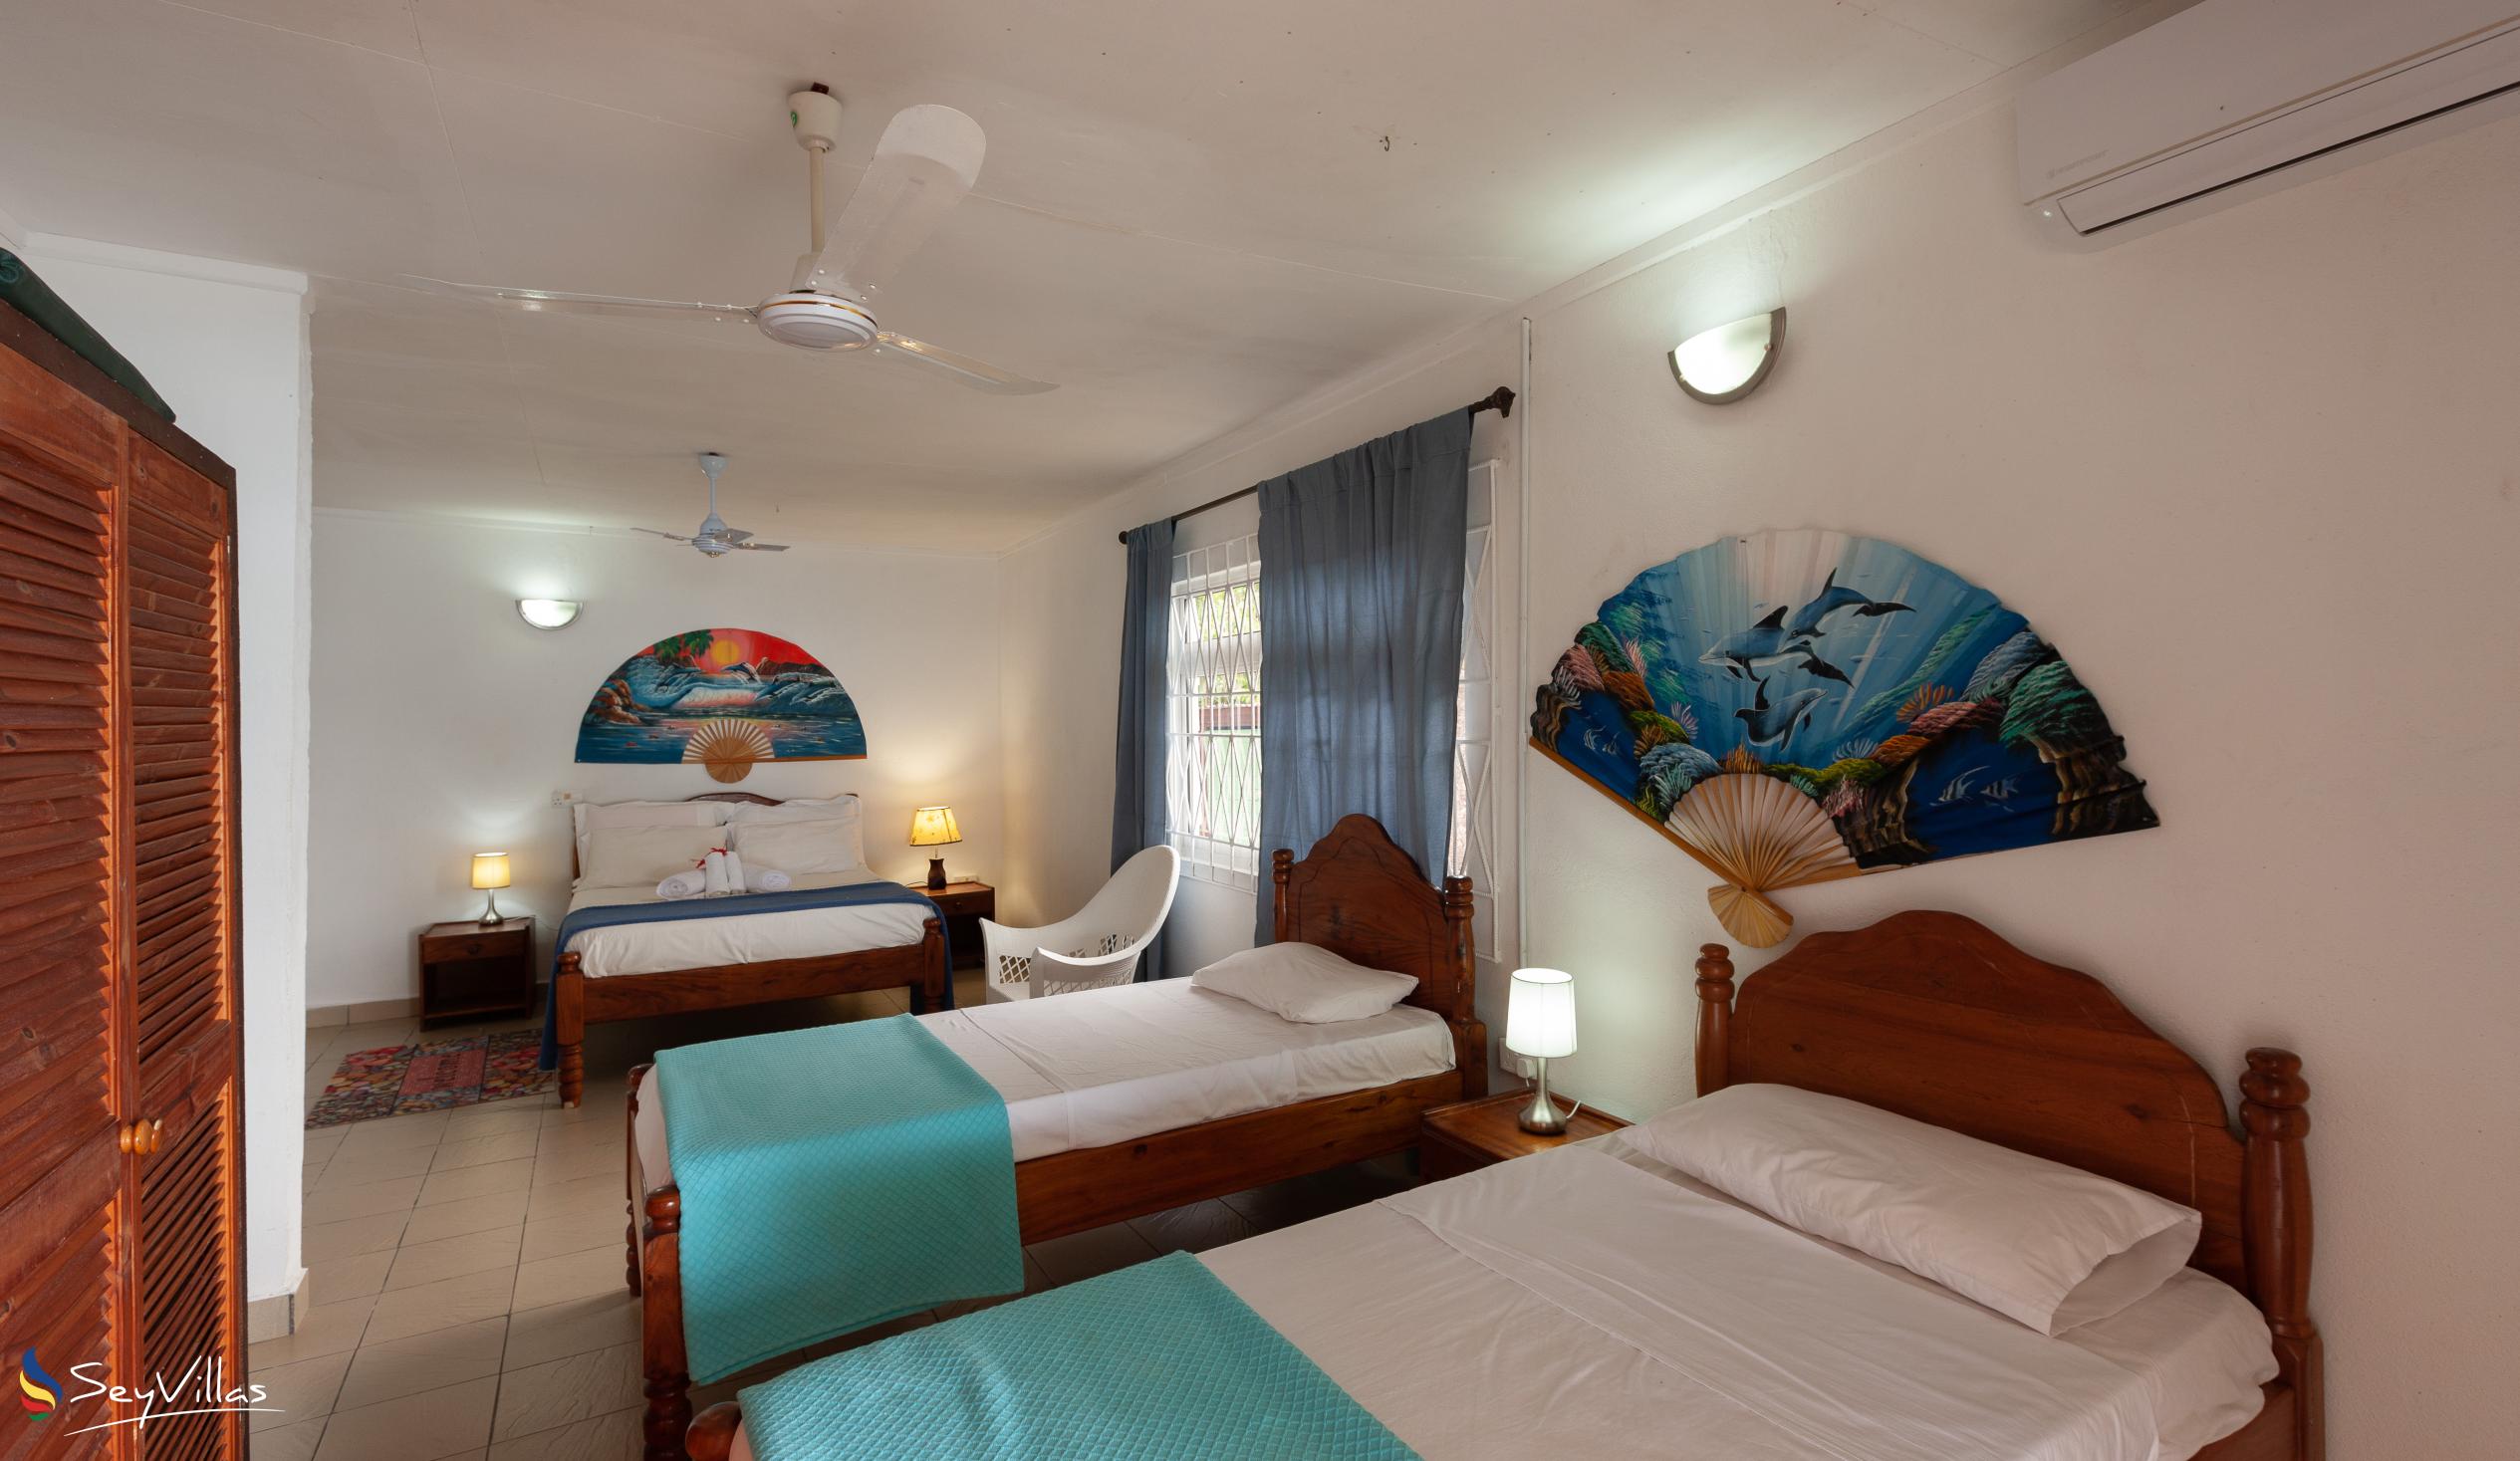 Foto 38: Maison du Soleil - Villa 2 chambres - Praslin (Seychelles)